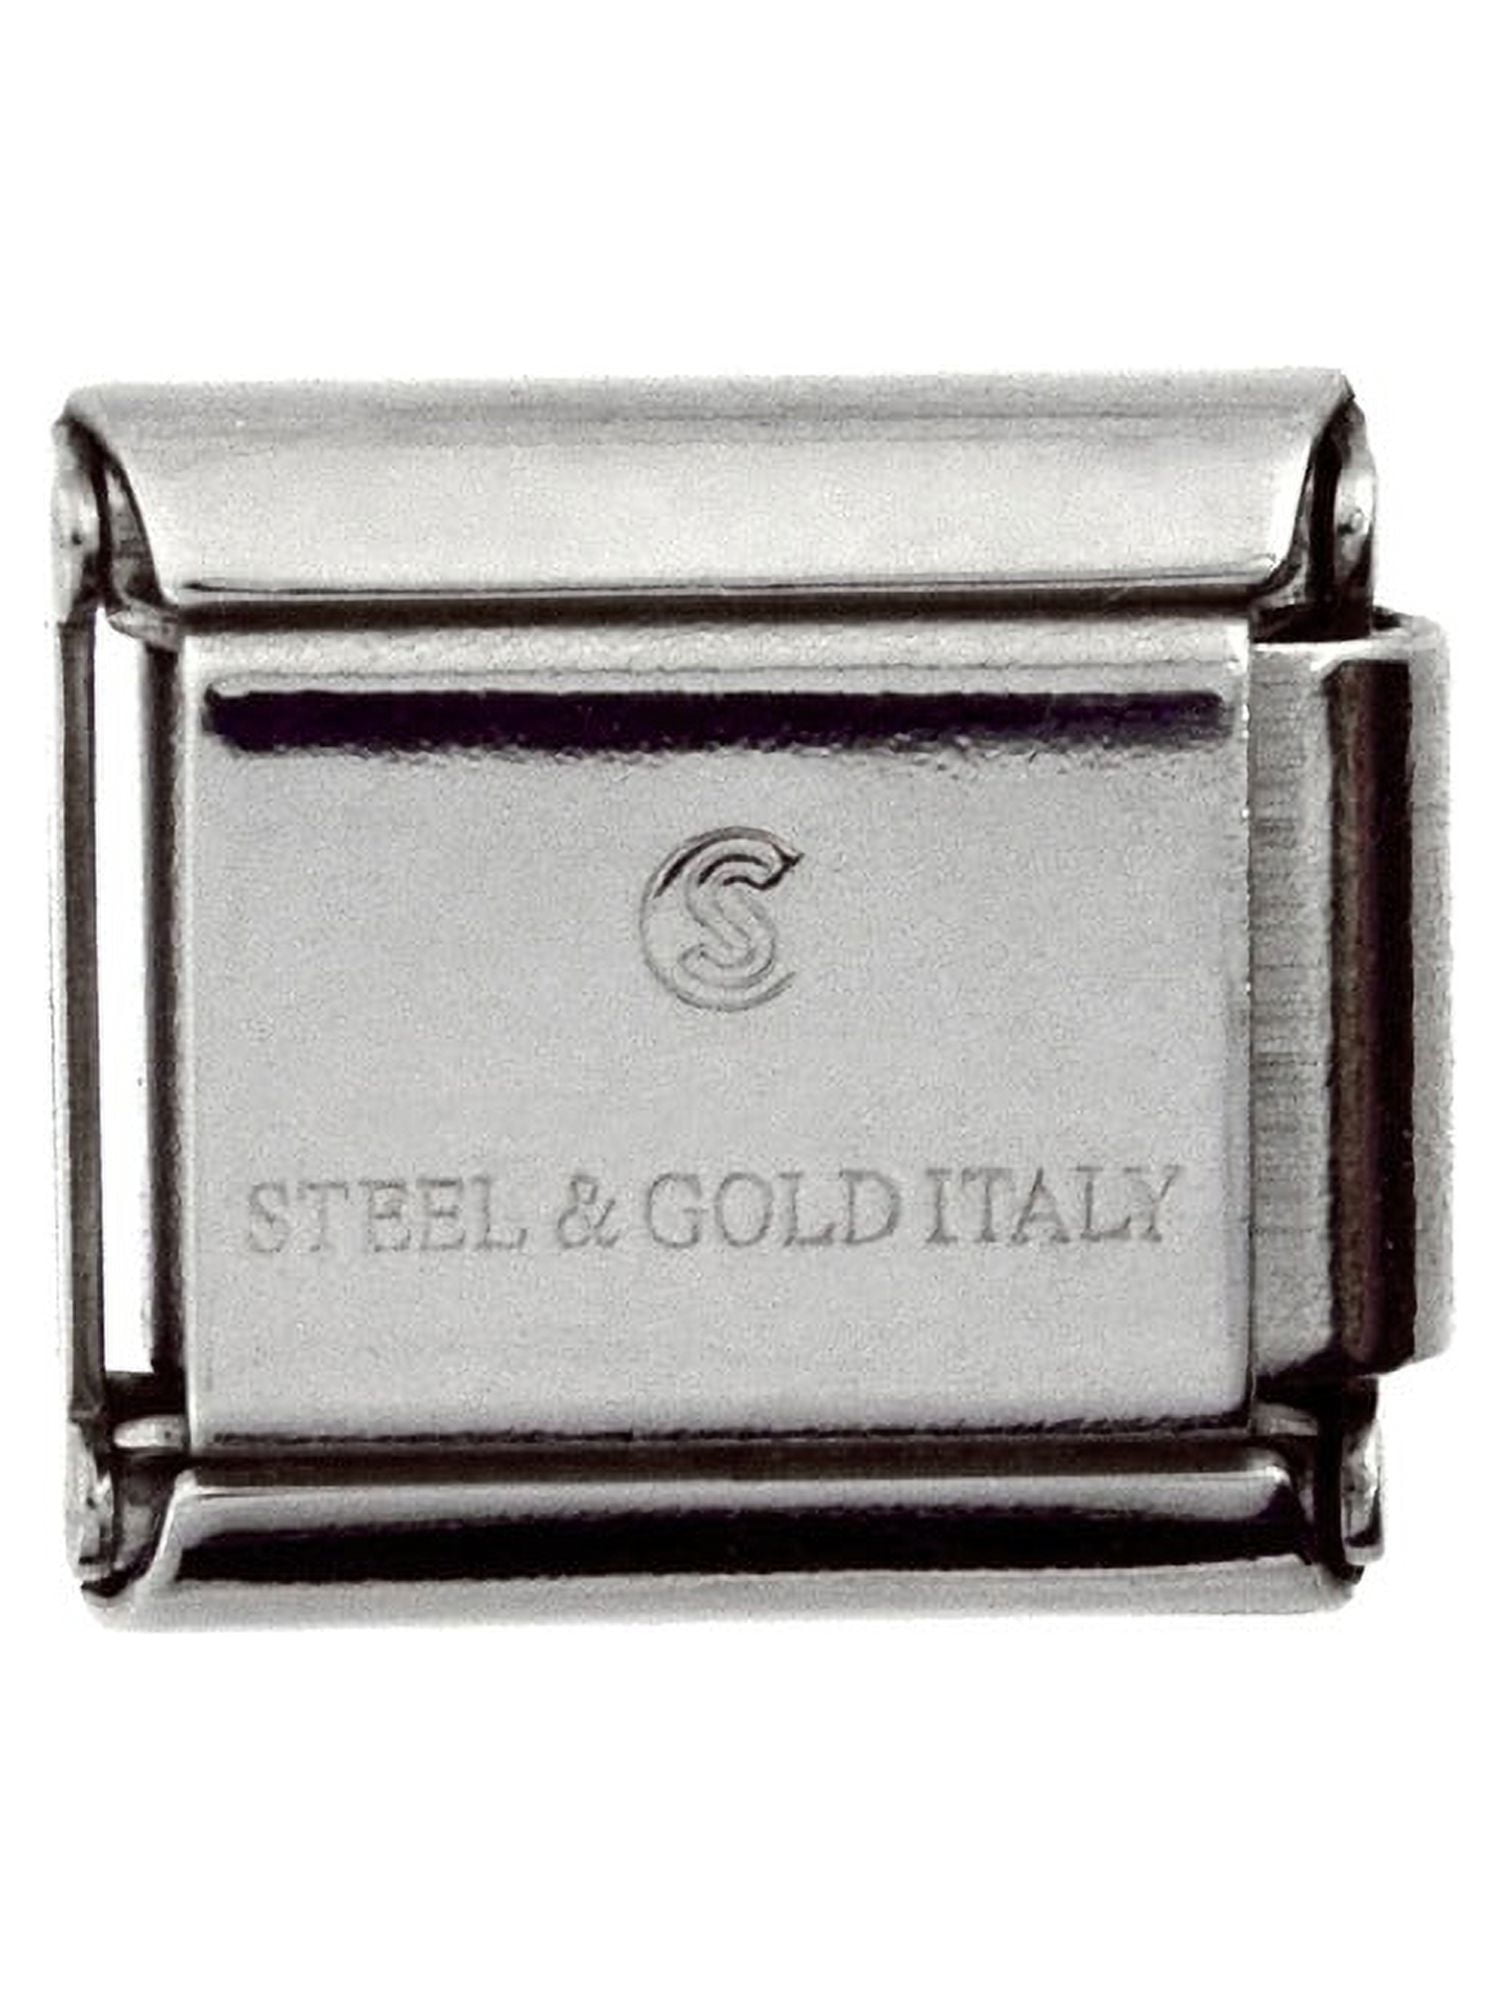 Original Italian Charm Bracelet